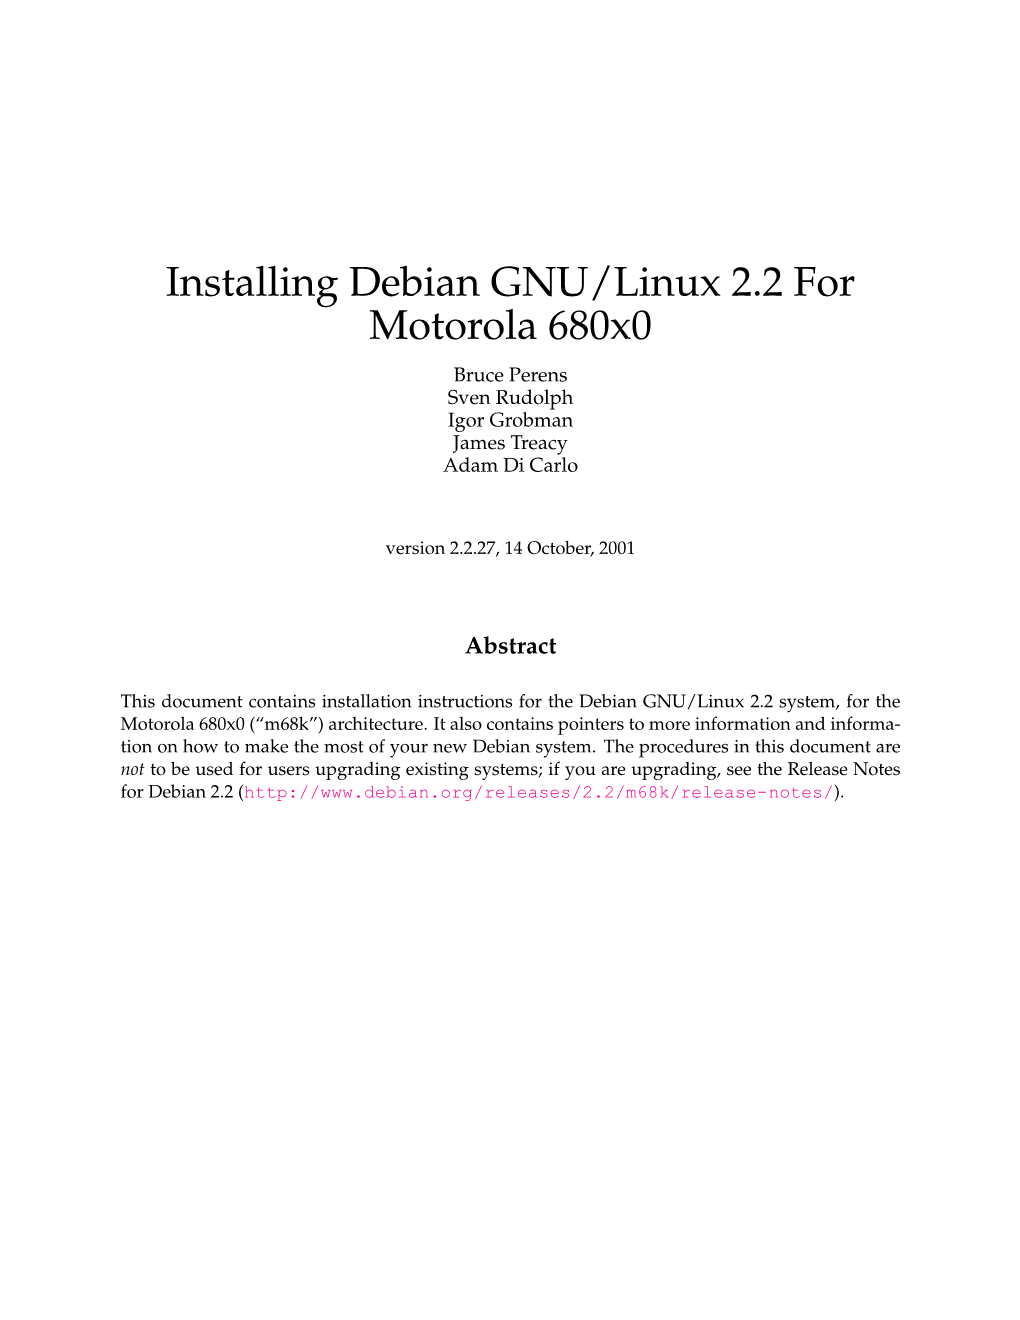 Installing Debian GNU/Linux 2.2 for Motorola 680X0 Bruce Perens Sven Rudolph Igor Grobman James Treacy Adam Di Carlo